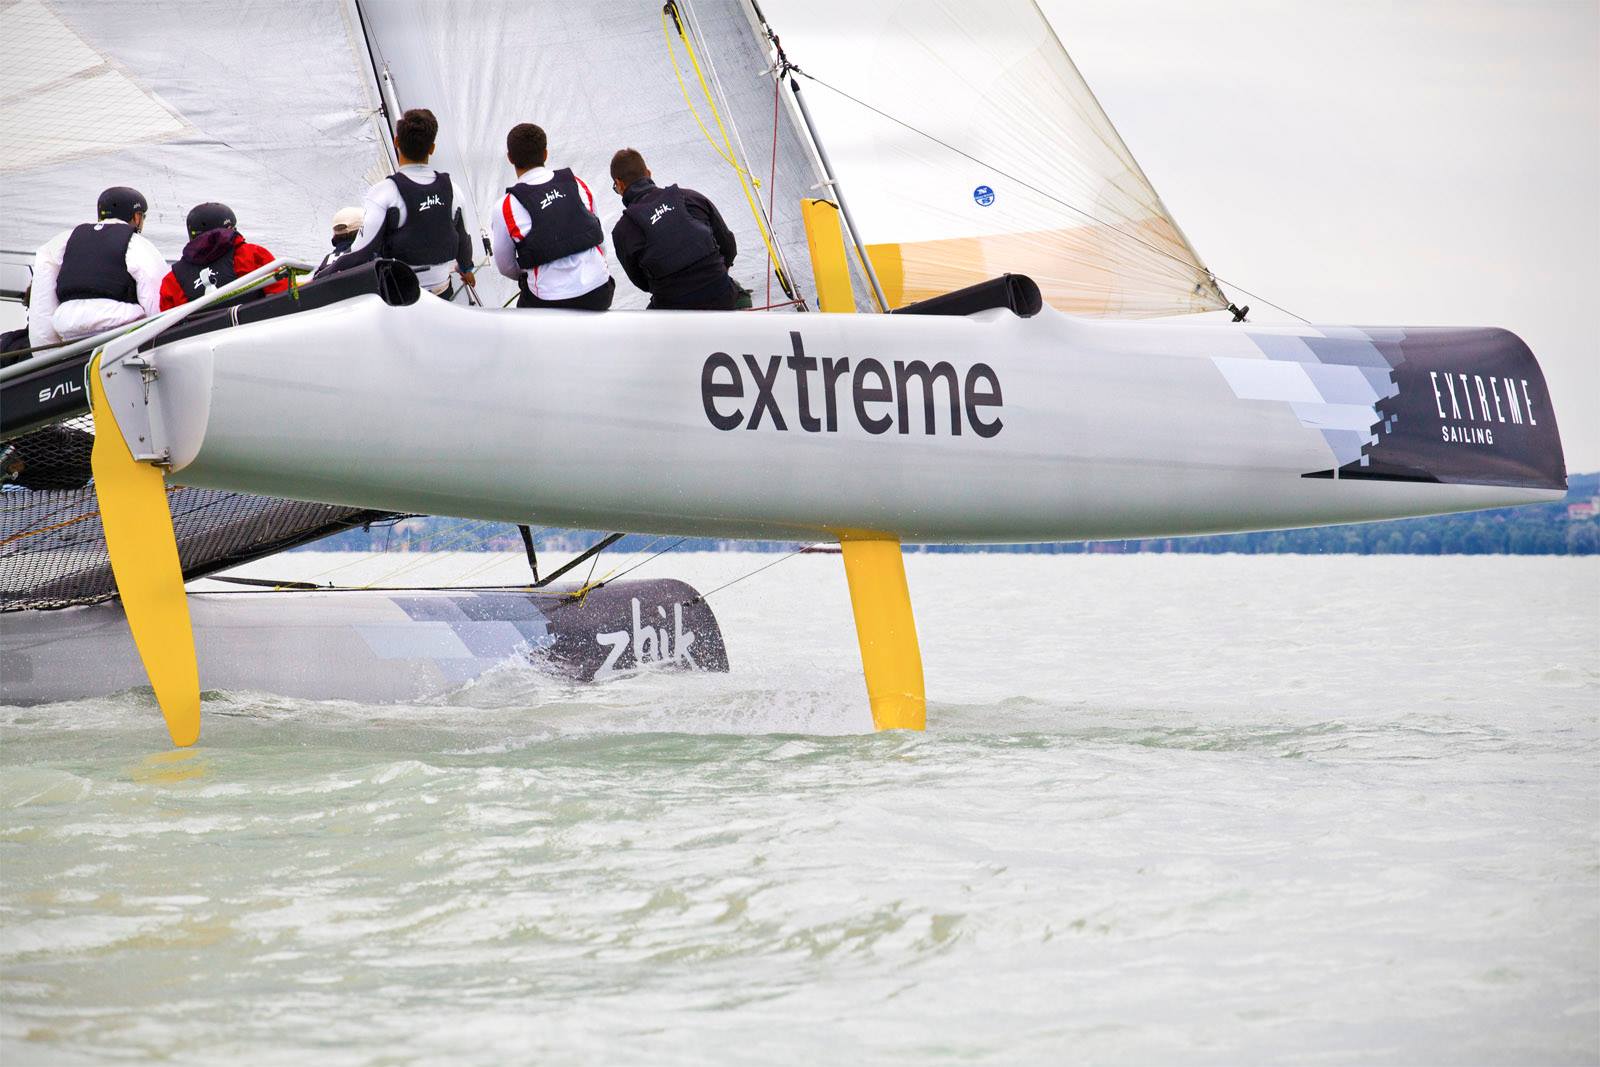 extreme40-sailing-team-hungary-balaton-hajozashu